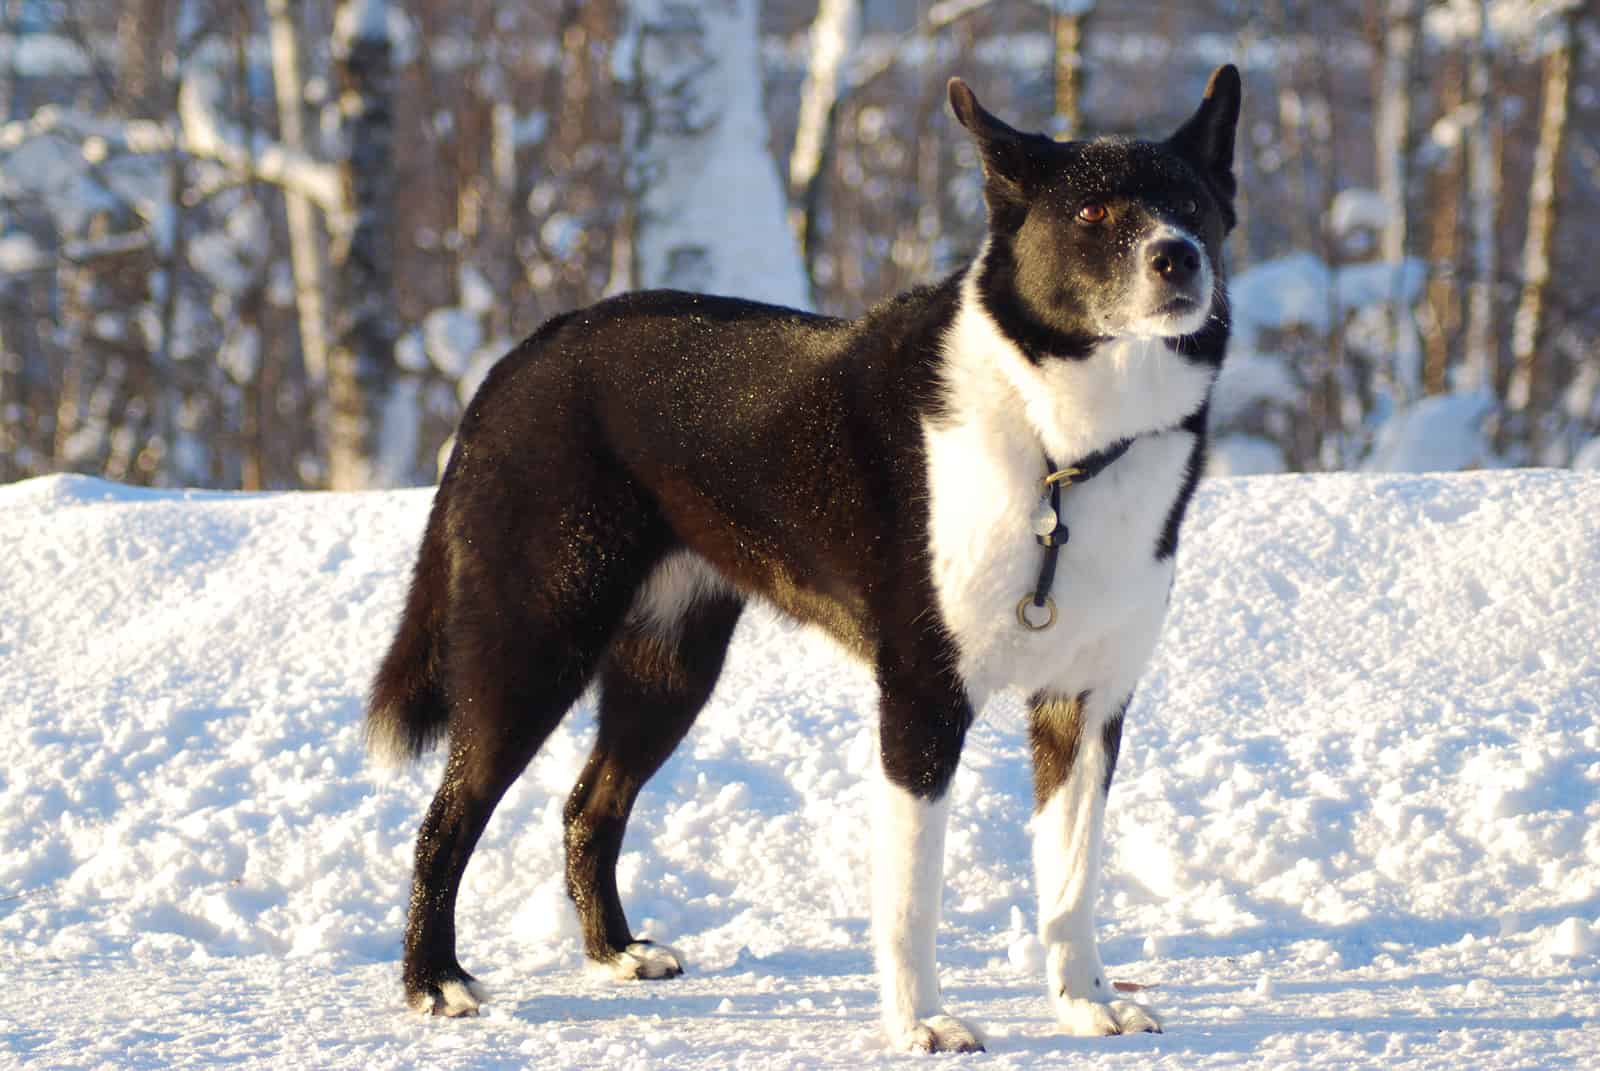 karelianbear dog standing on the snow